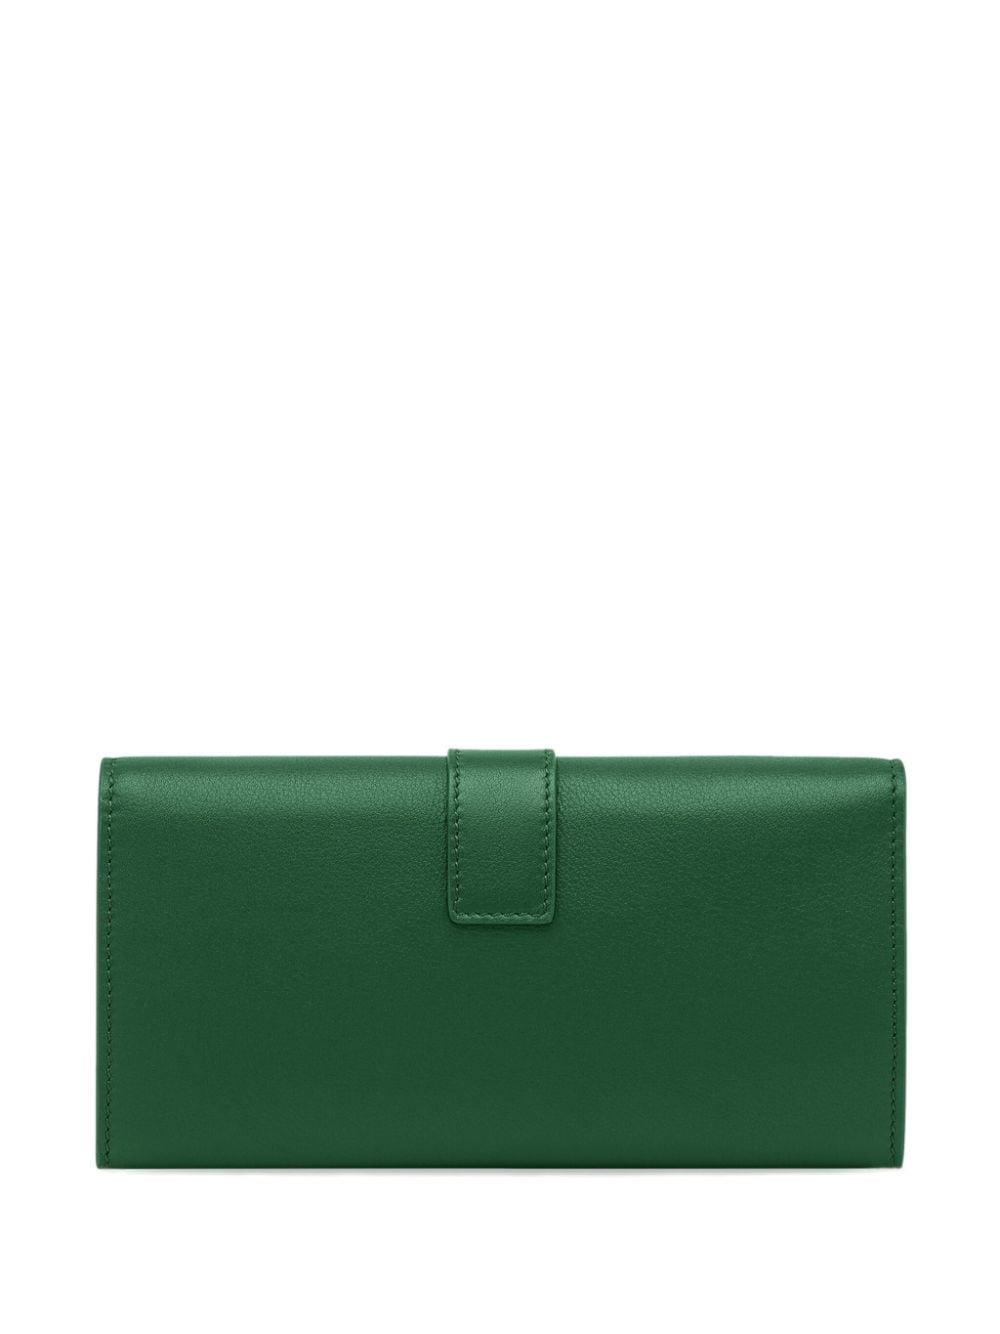 Ferragamo Hug leather chain wallet - Green